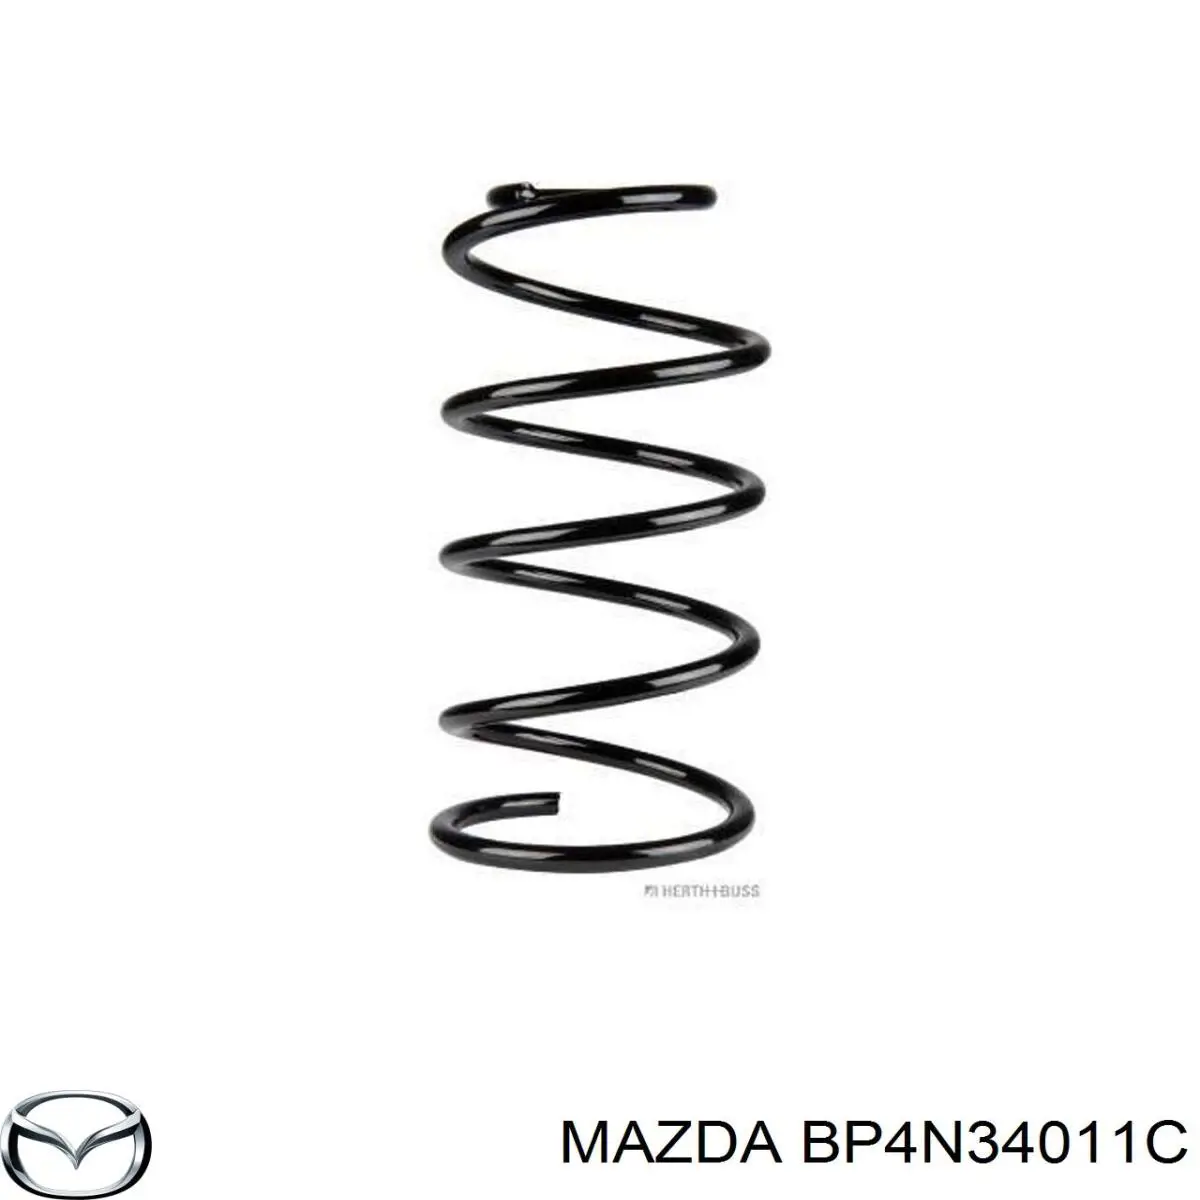 BP4N34011C Mazda mola dianteira